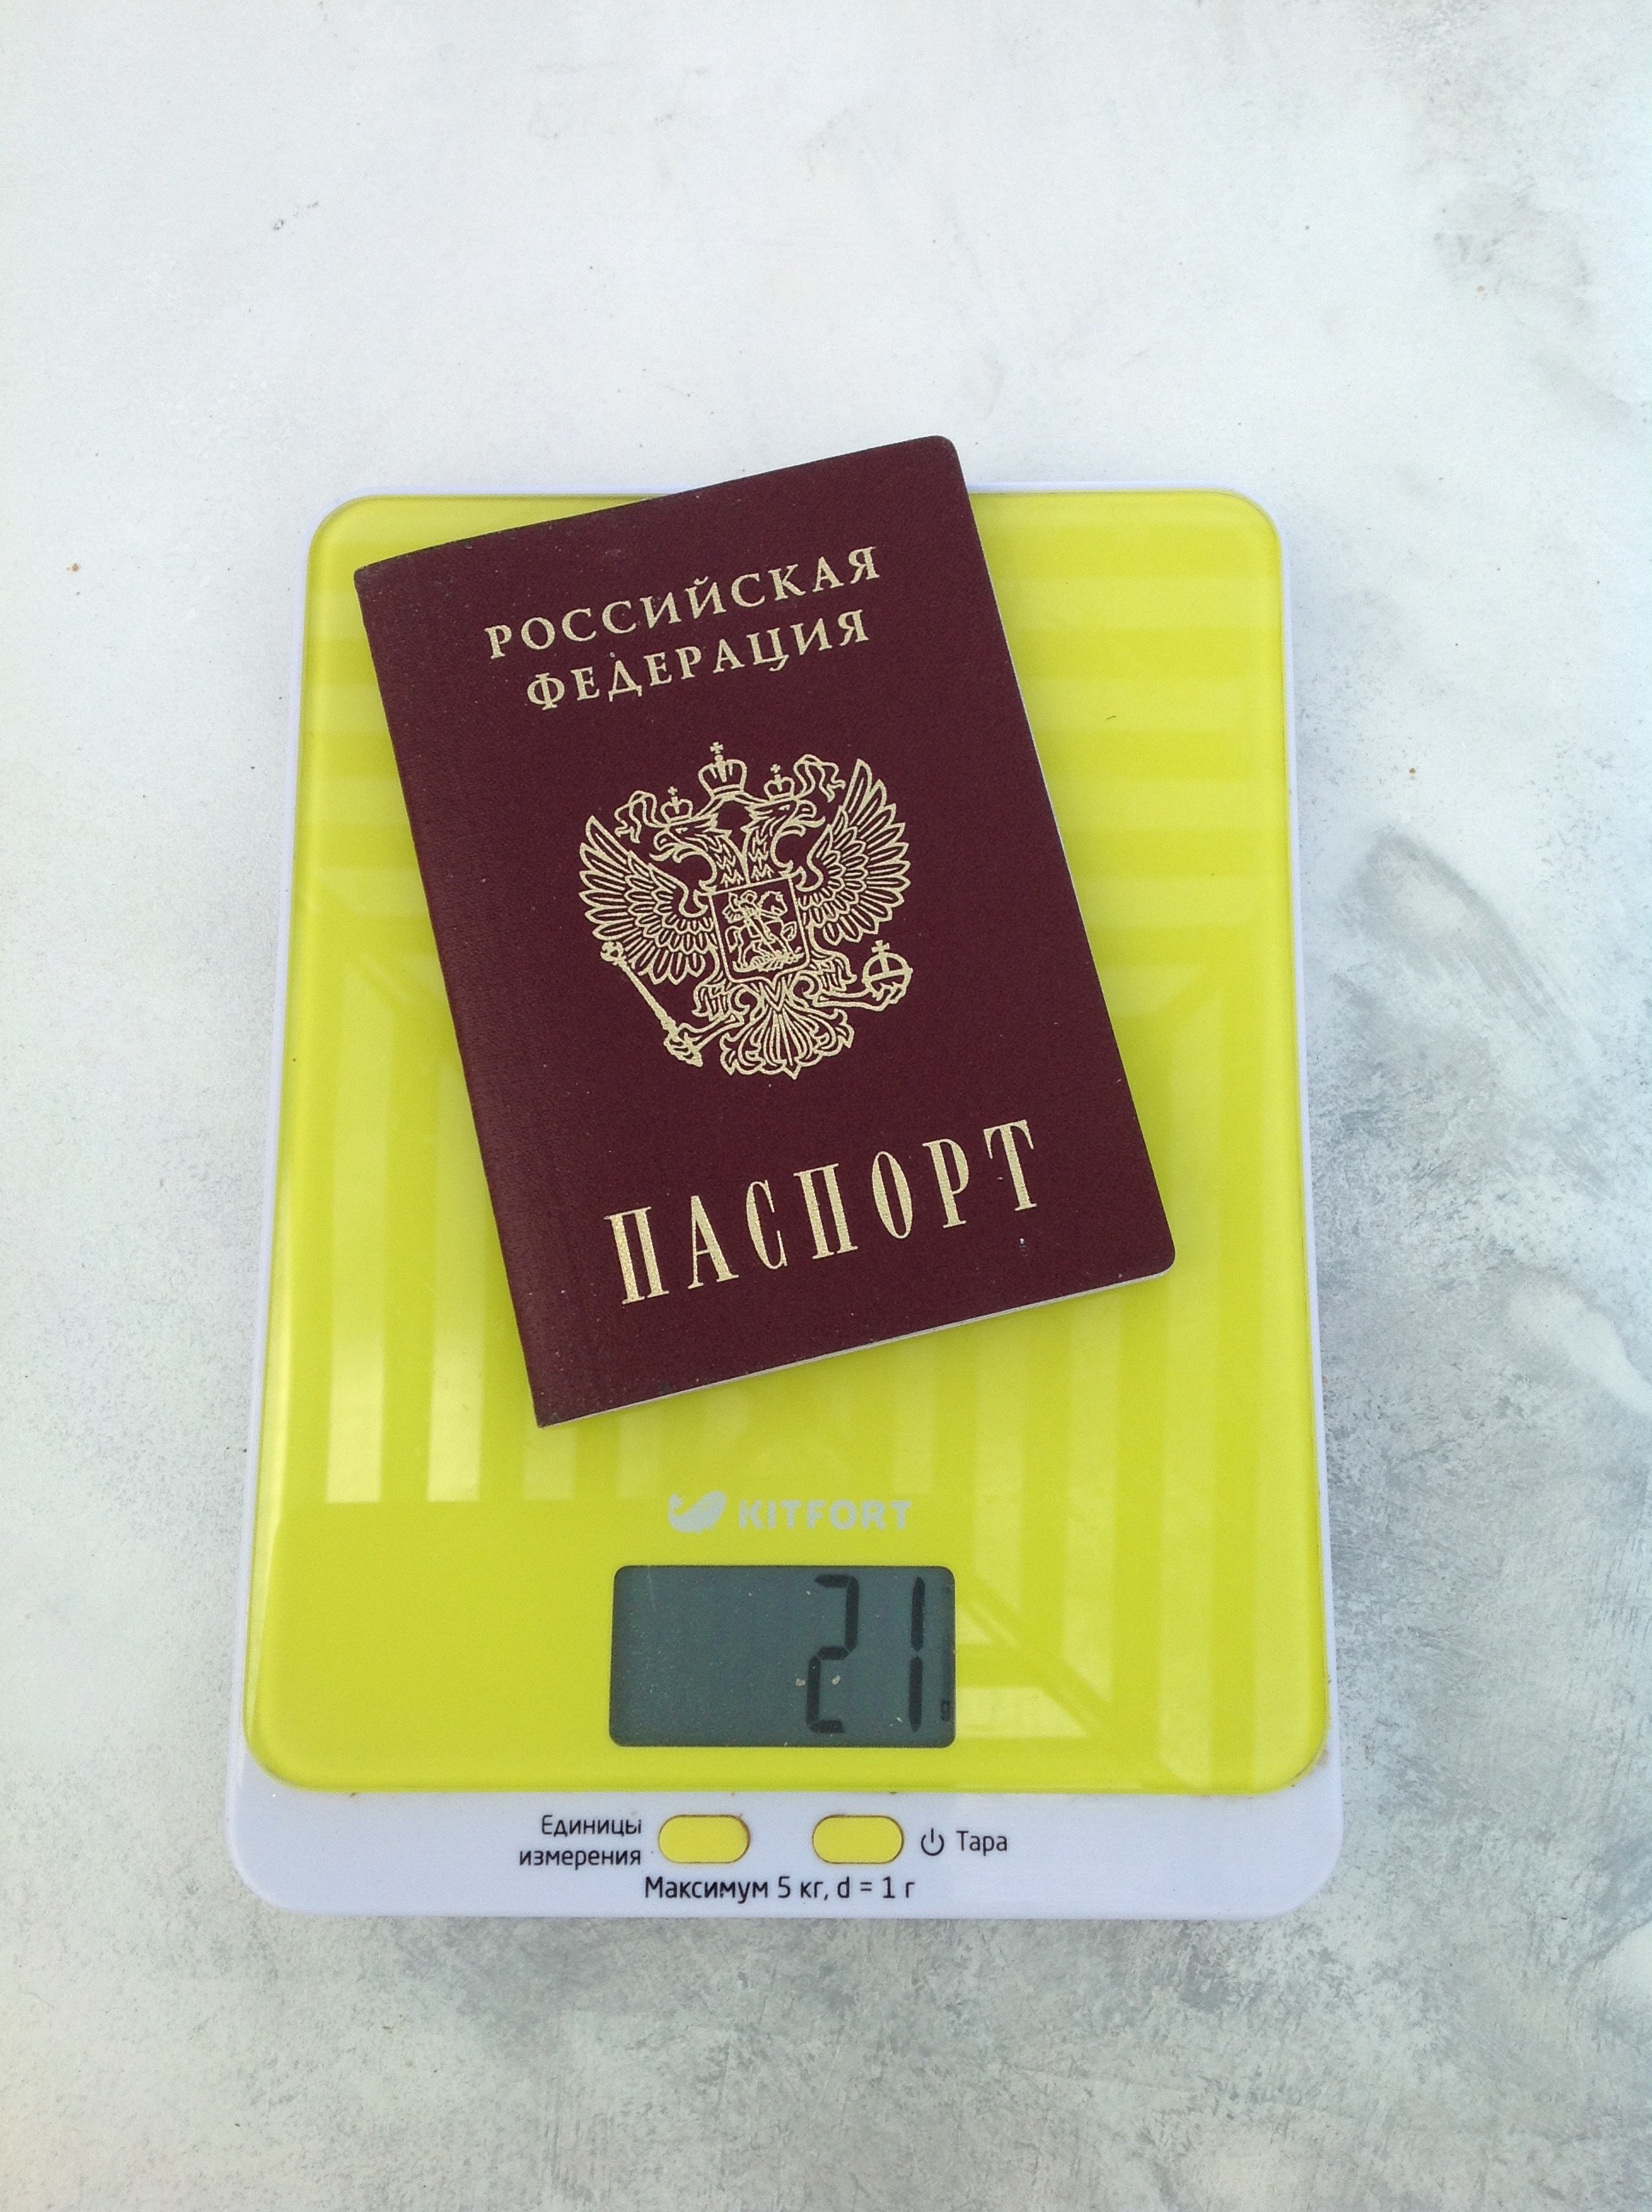 вес паспорта рф